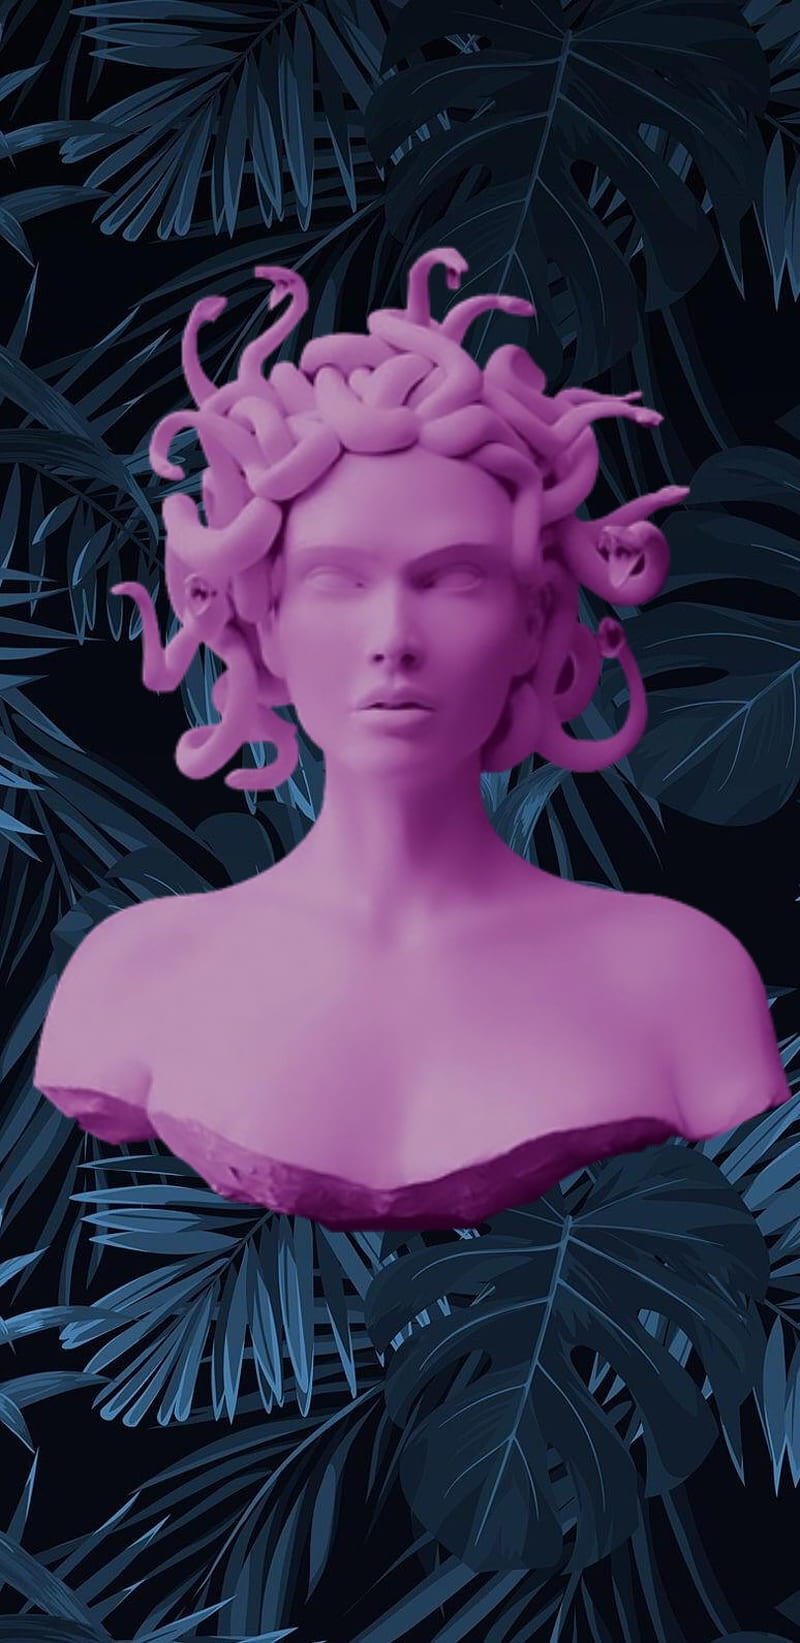 1920x1080px, 1080P free download | Medusa, cool, greek, pink, statue ...